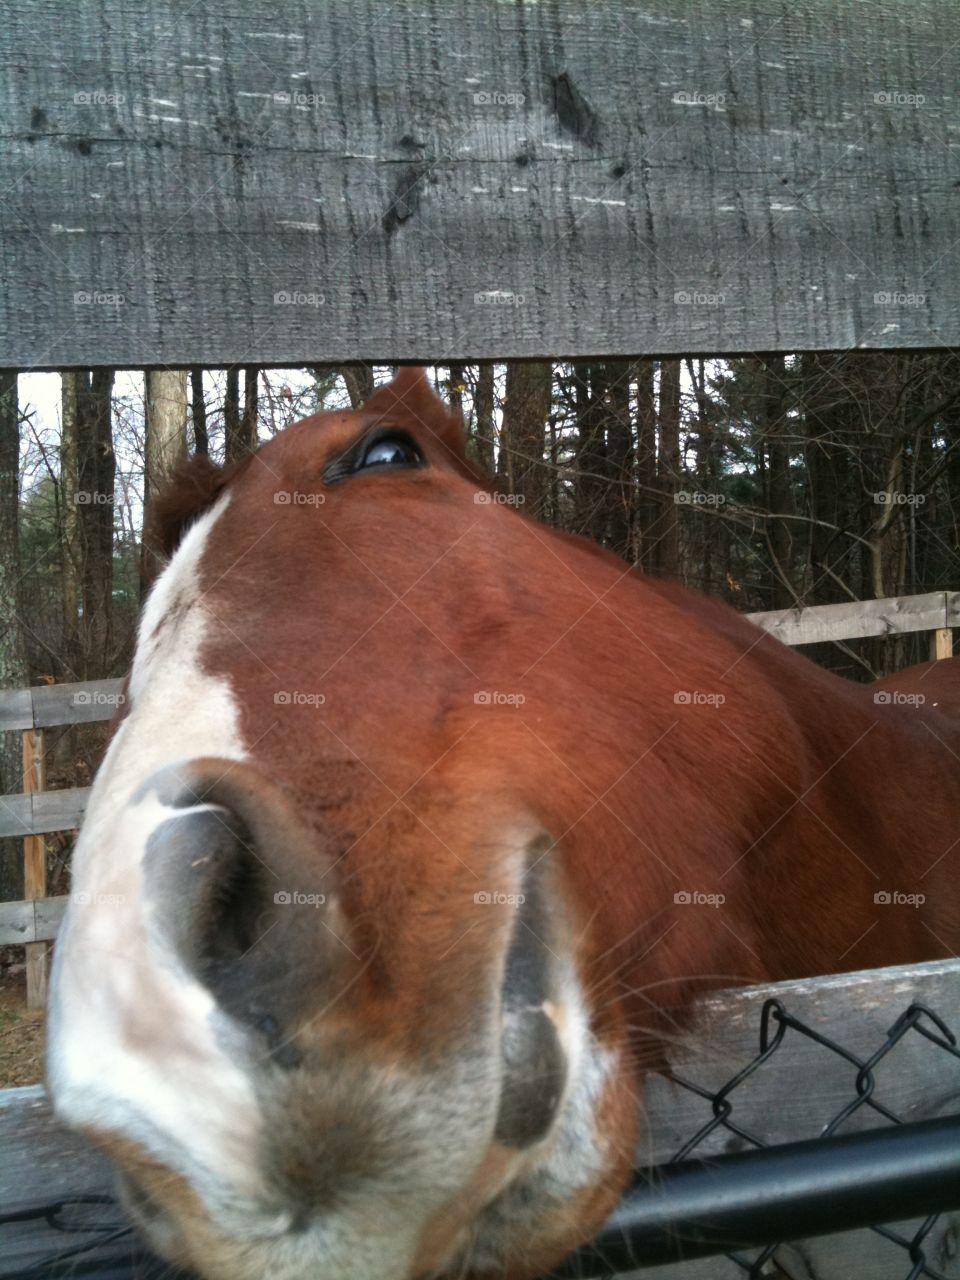 Horse nose 